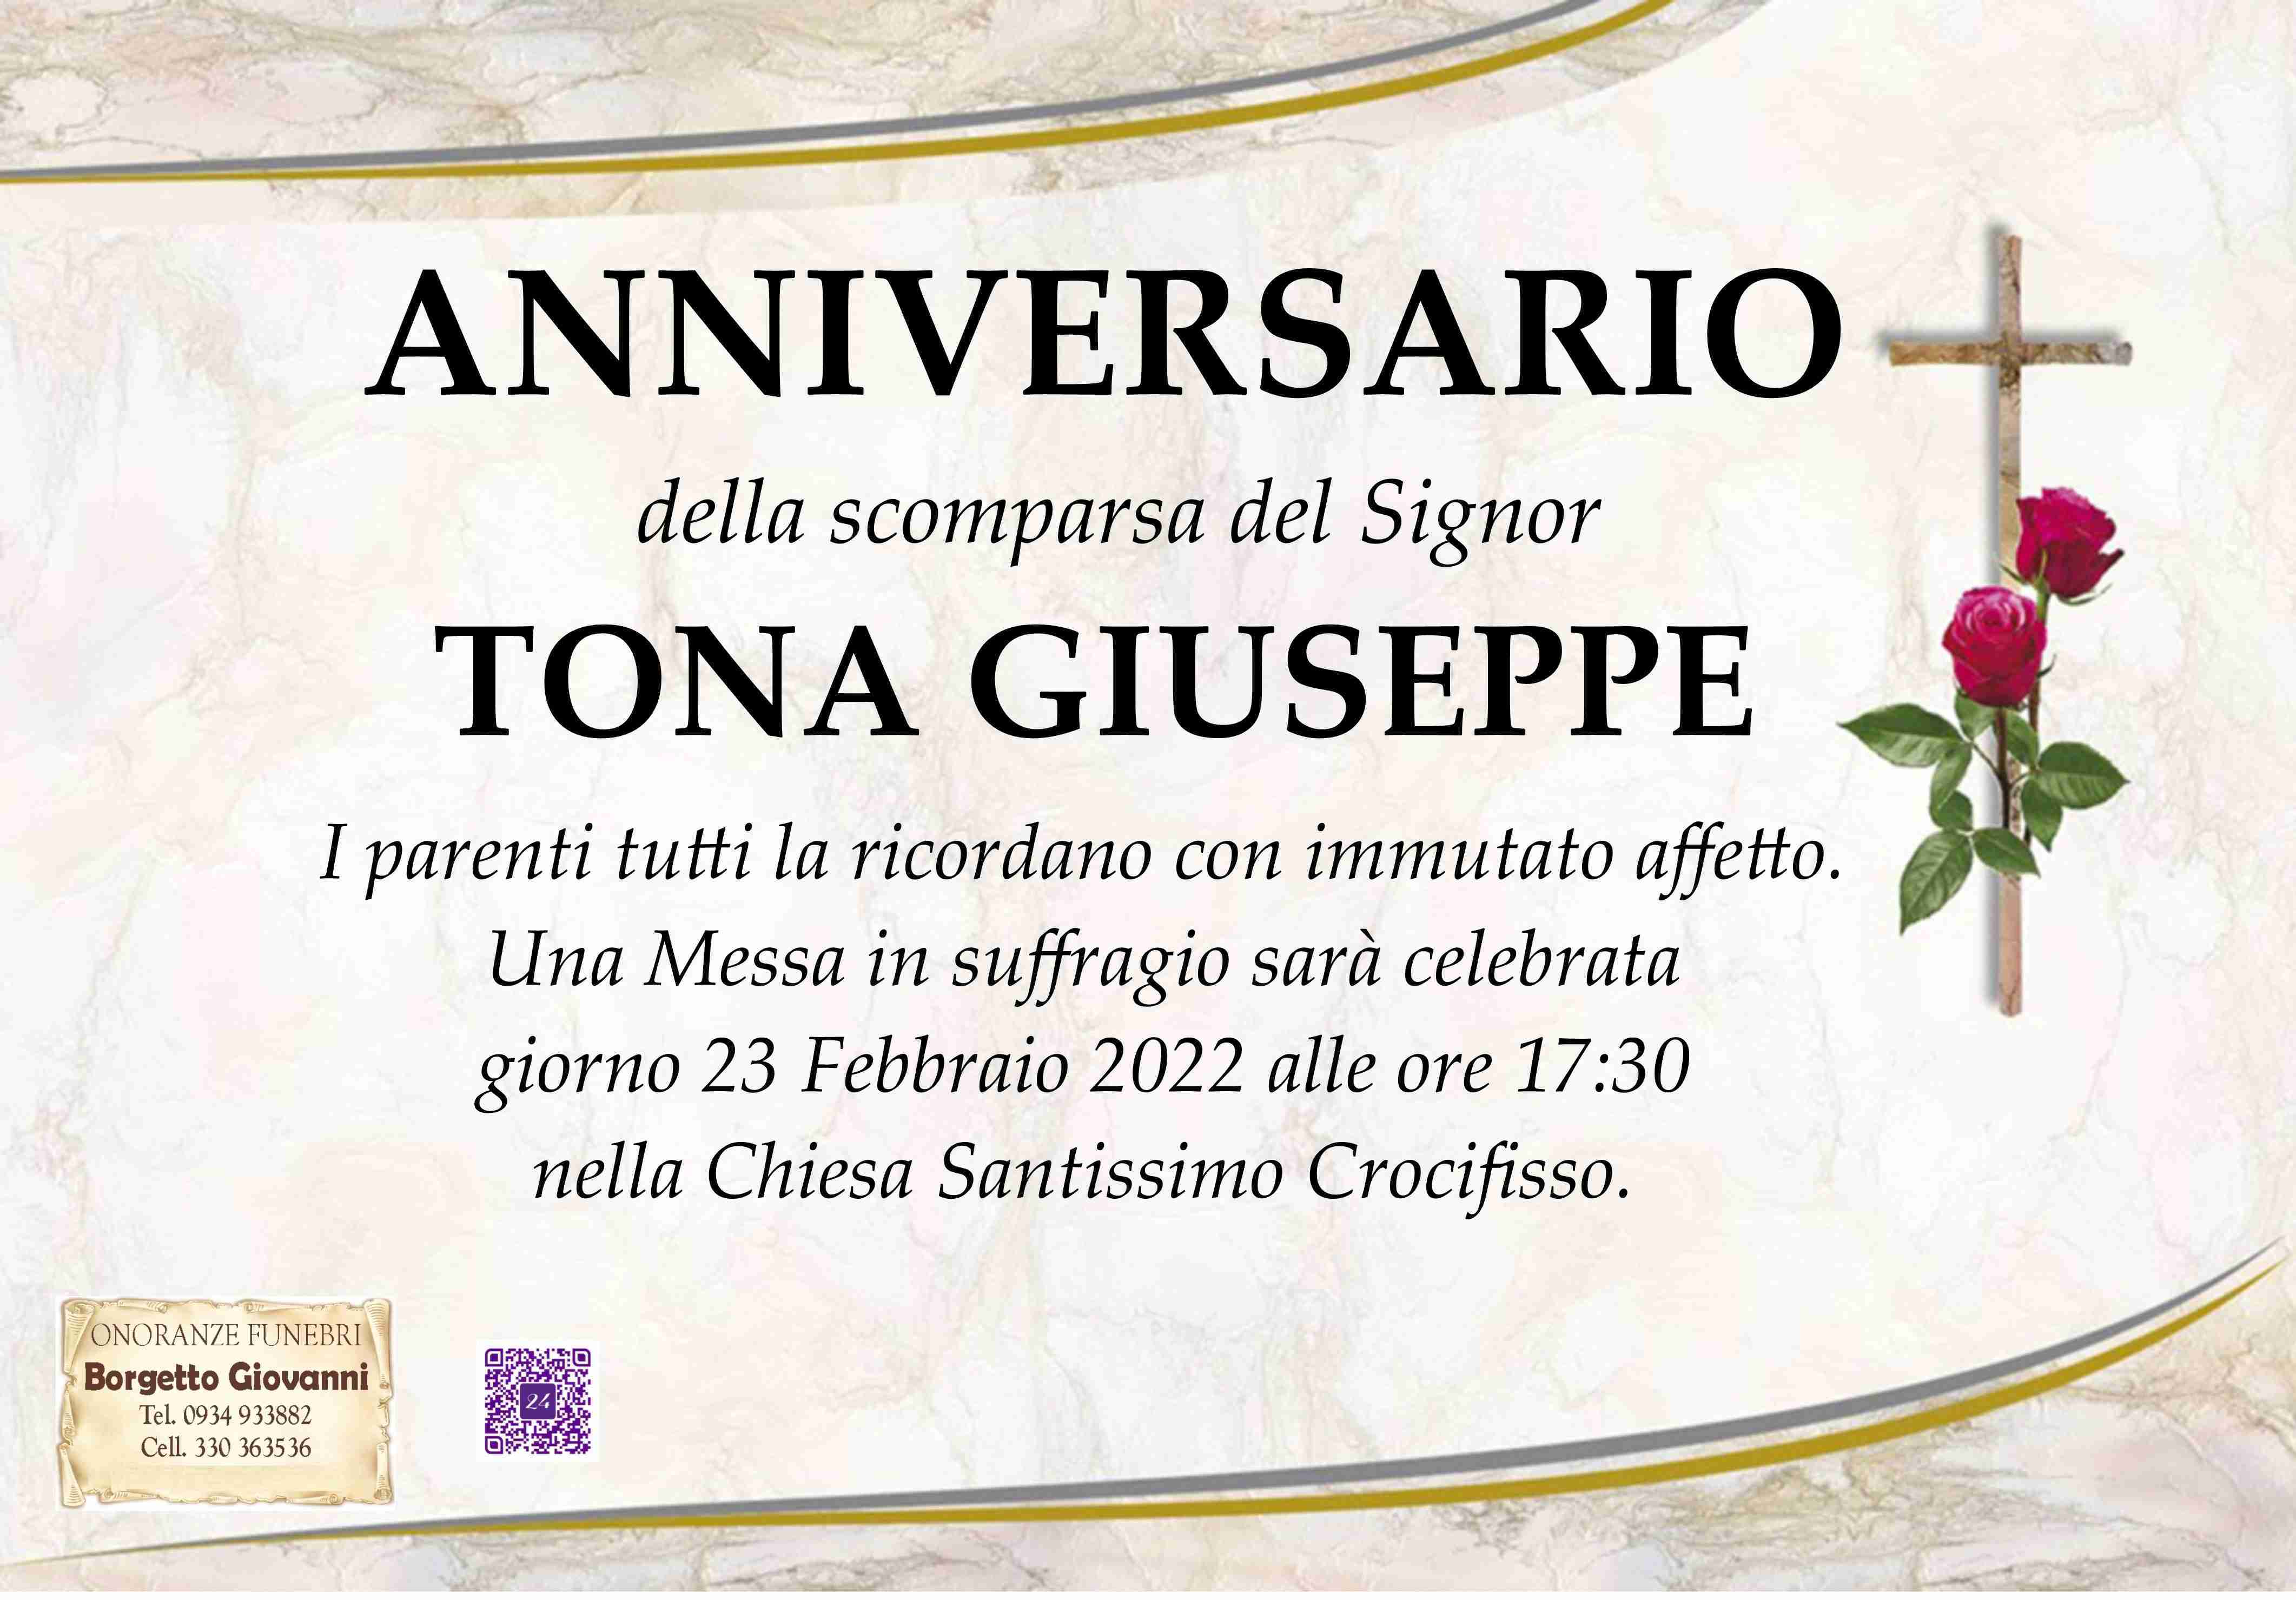 Giuseppe Tona